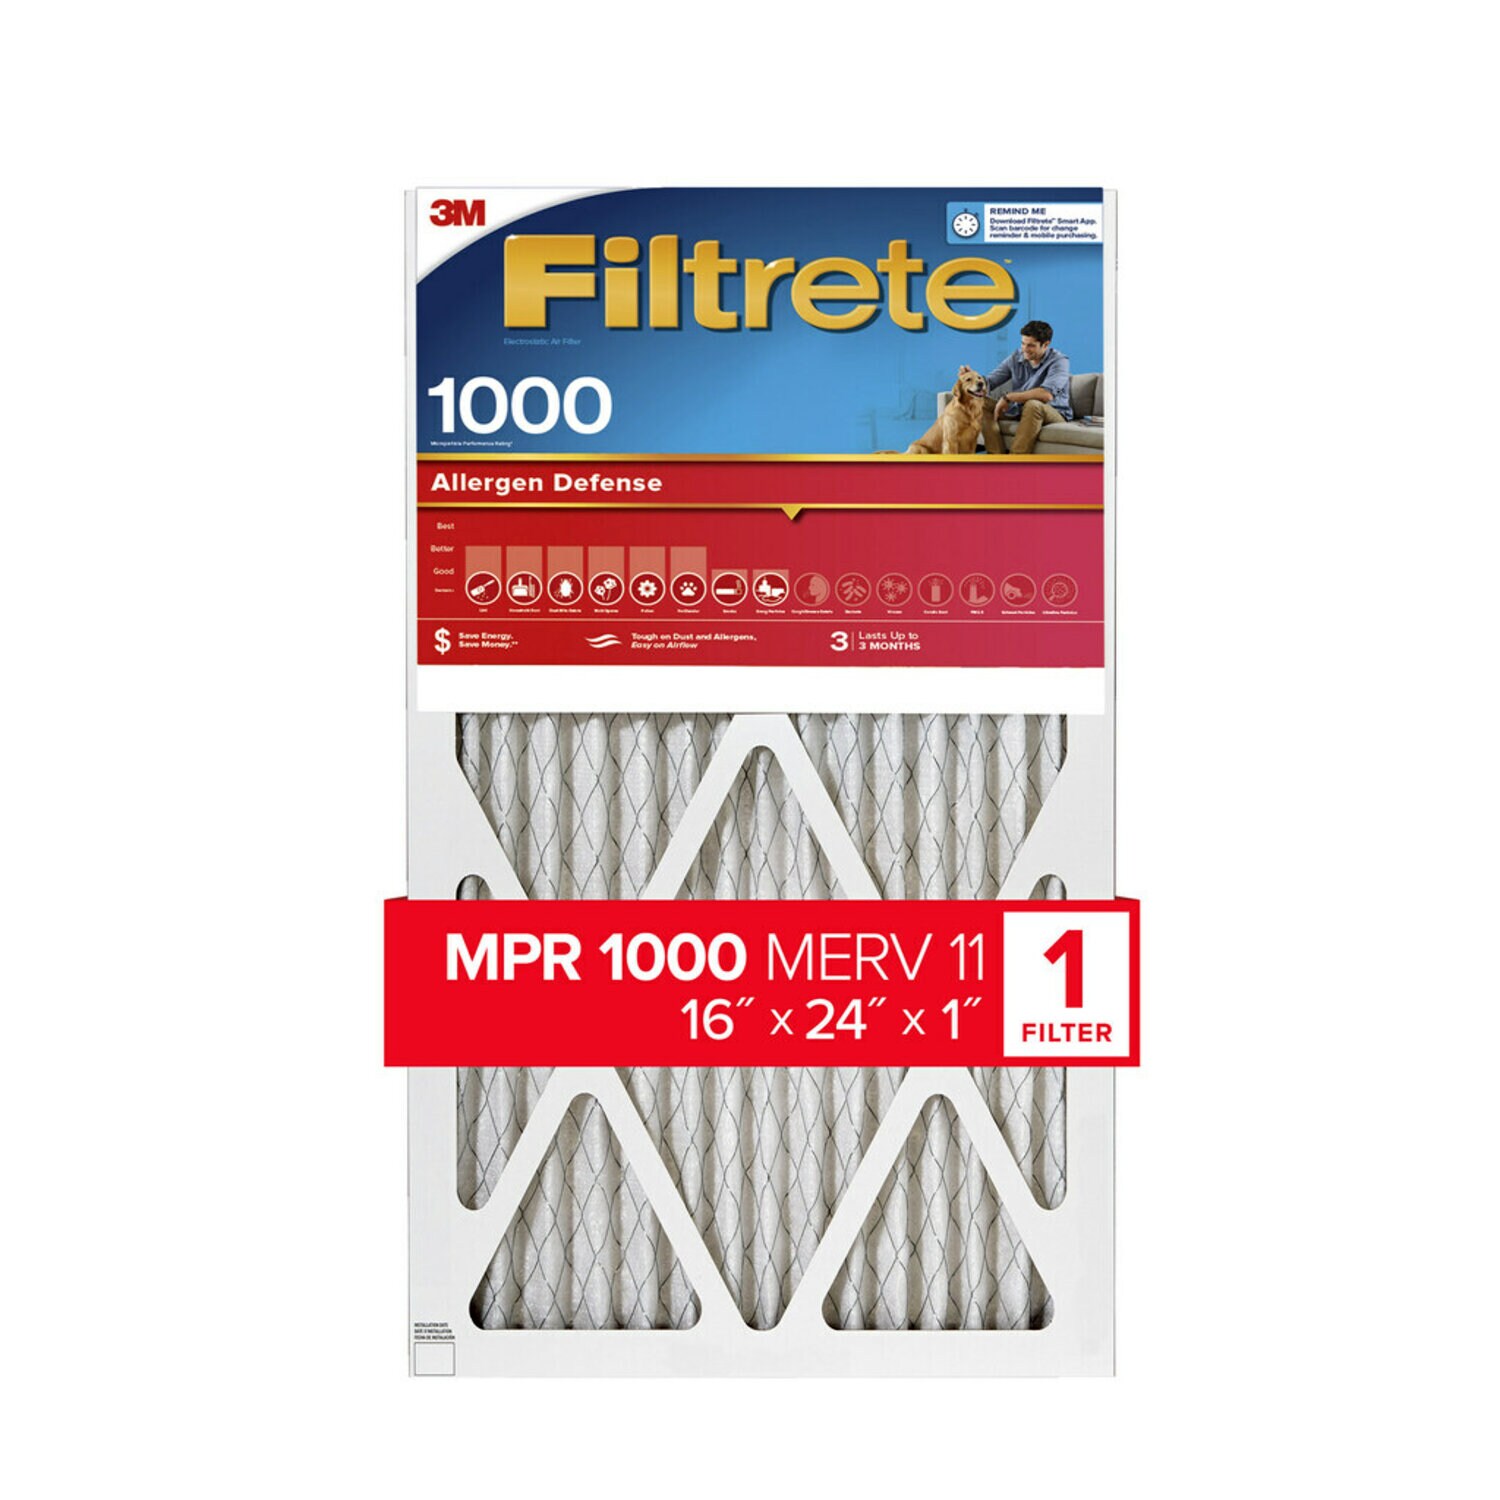 7100192543 - Filtrete Allergen Defense Air Filter, 1000 MPR, AL25-4, 16 in x 24 in x
1 in (40,6 cm x 60,9 cm x 2,5 cm)